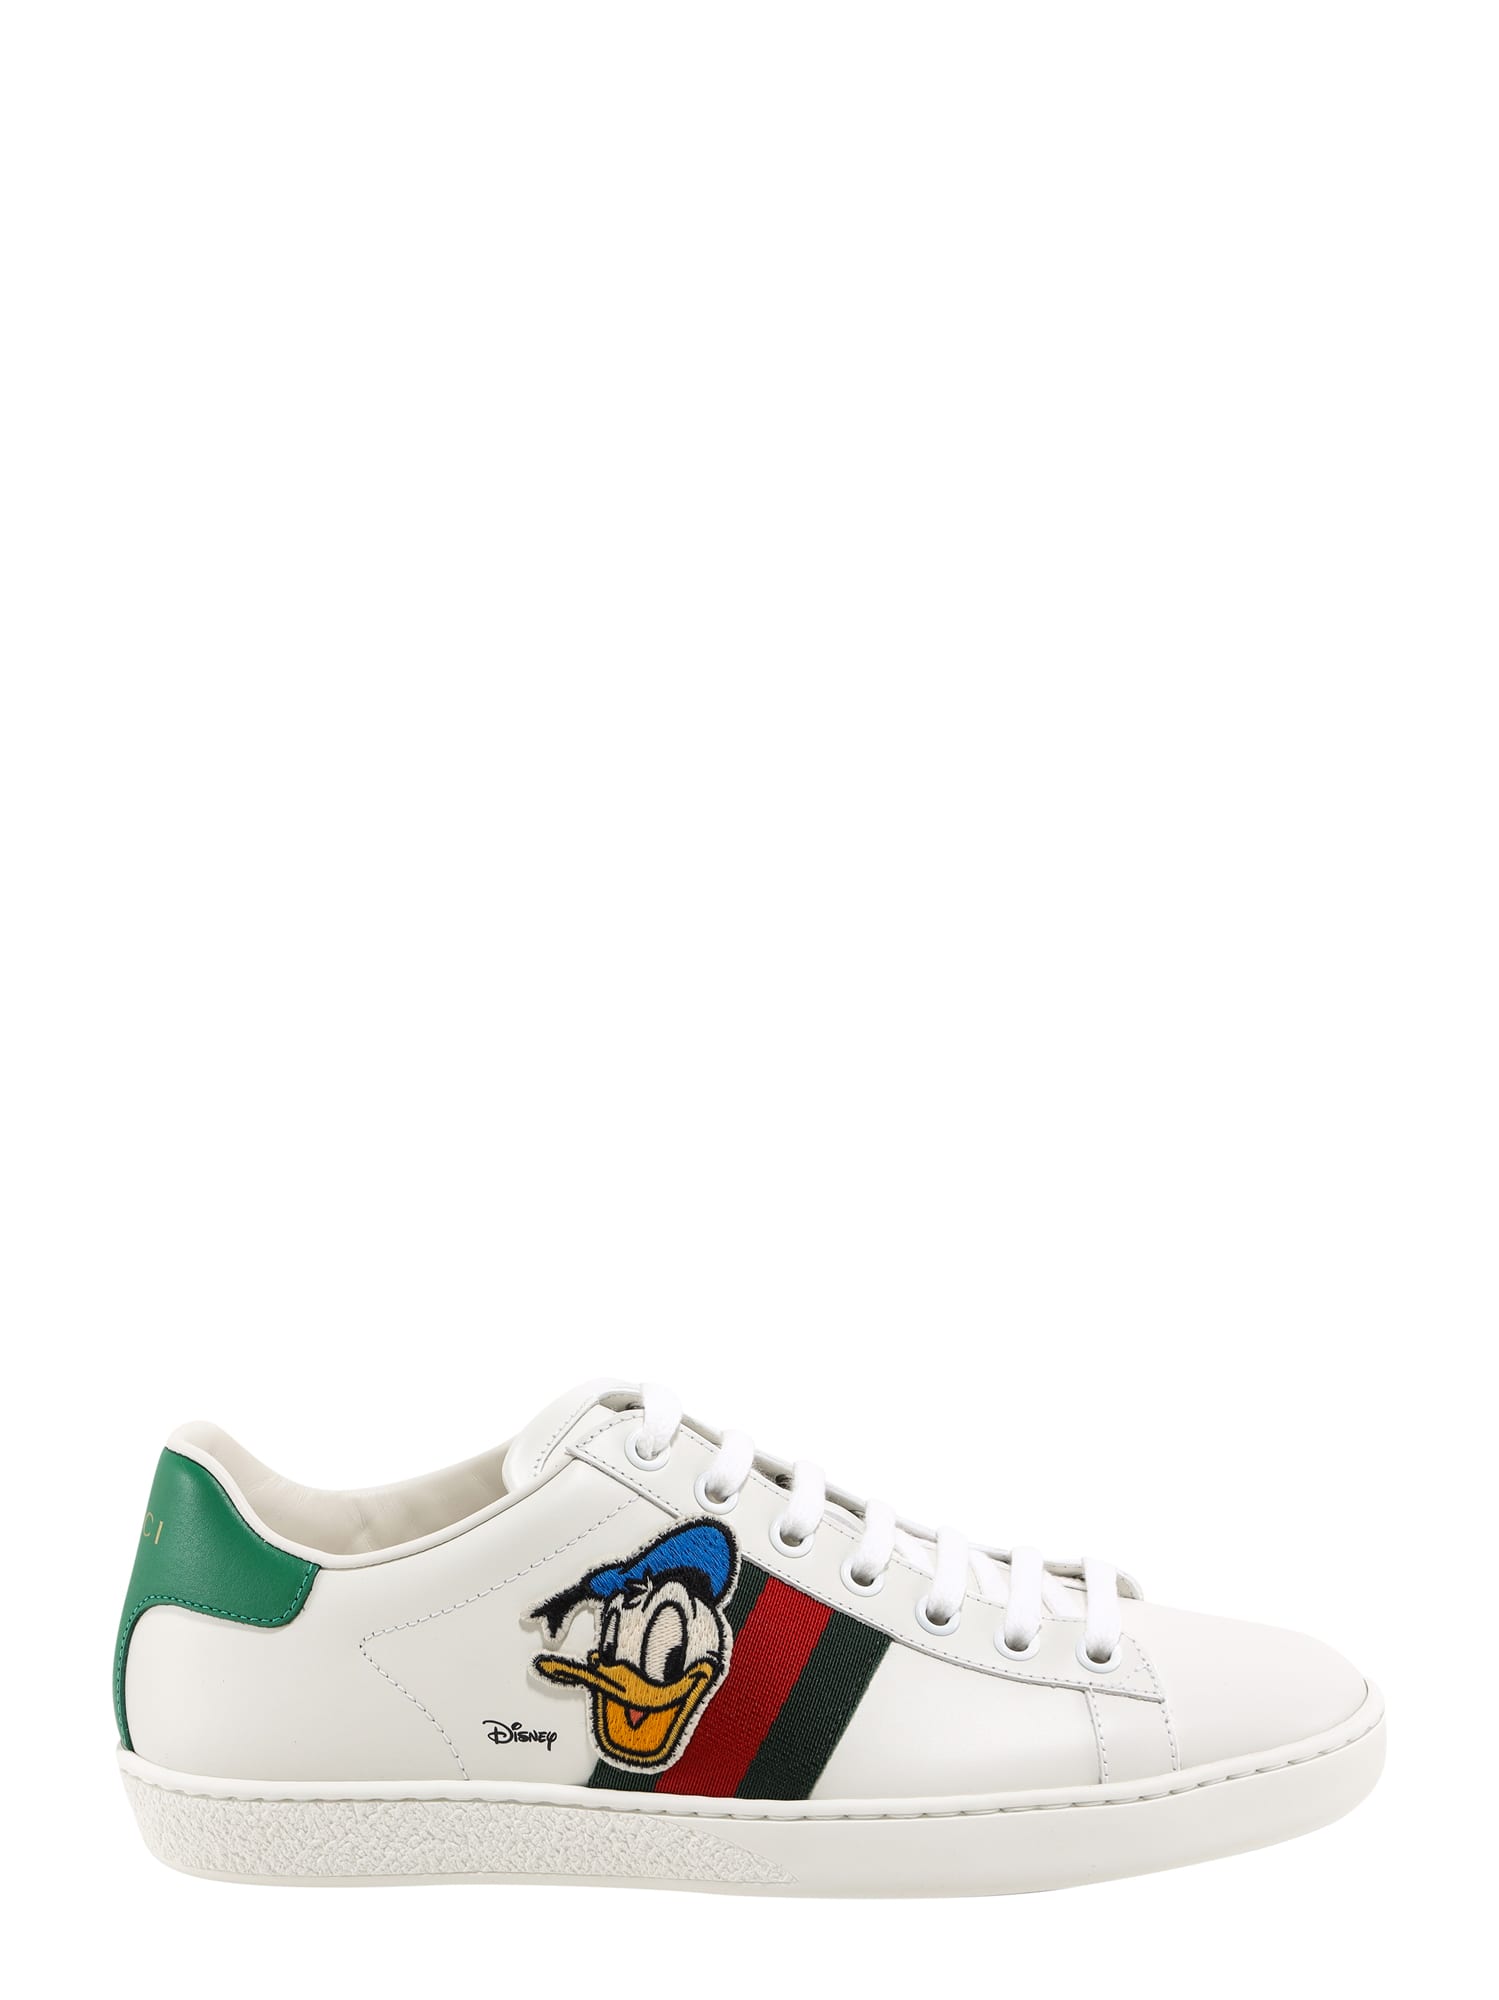 Gucci Donald Duck Disney X Gucci Sneakers